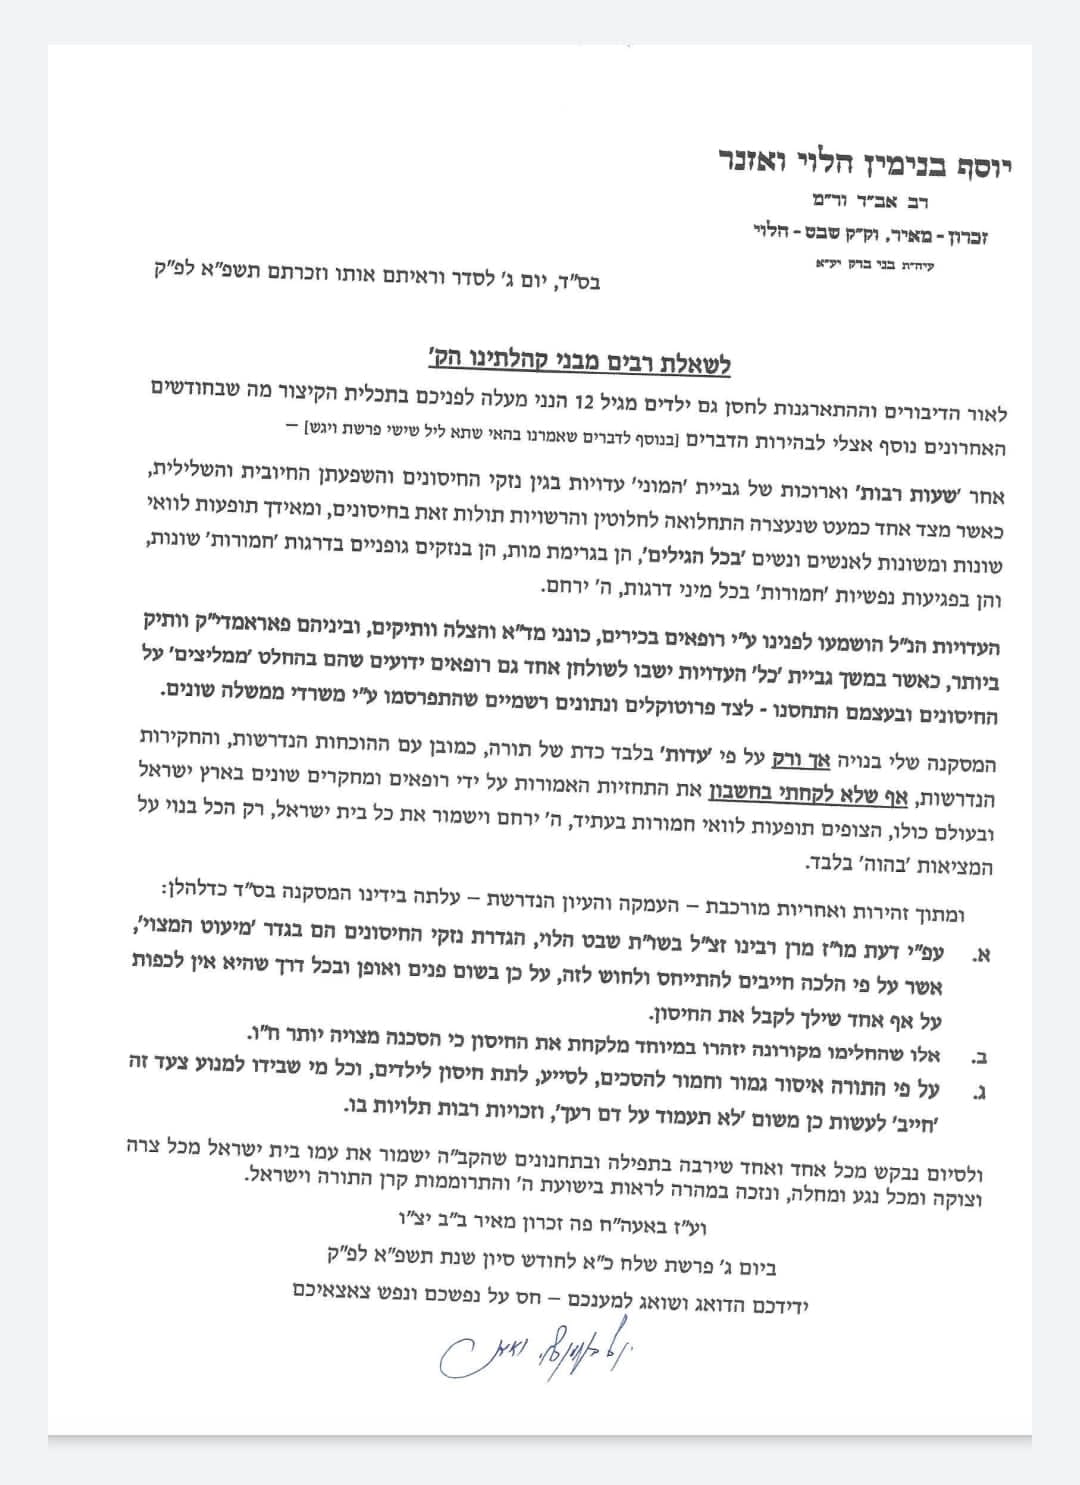 Original signed Letter from Rabbi Wosner against vaccine for children